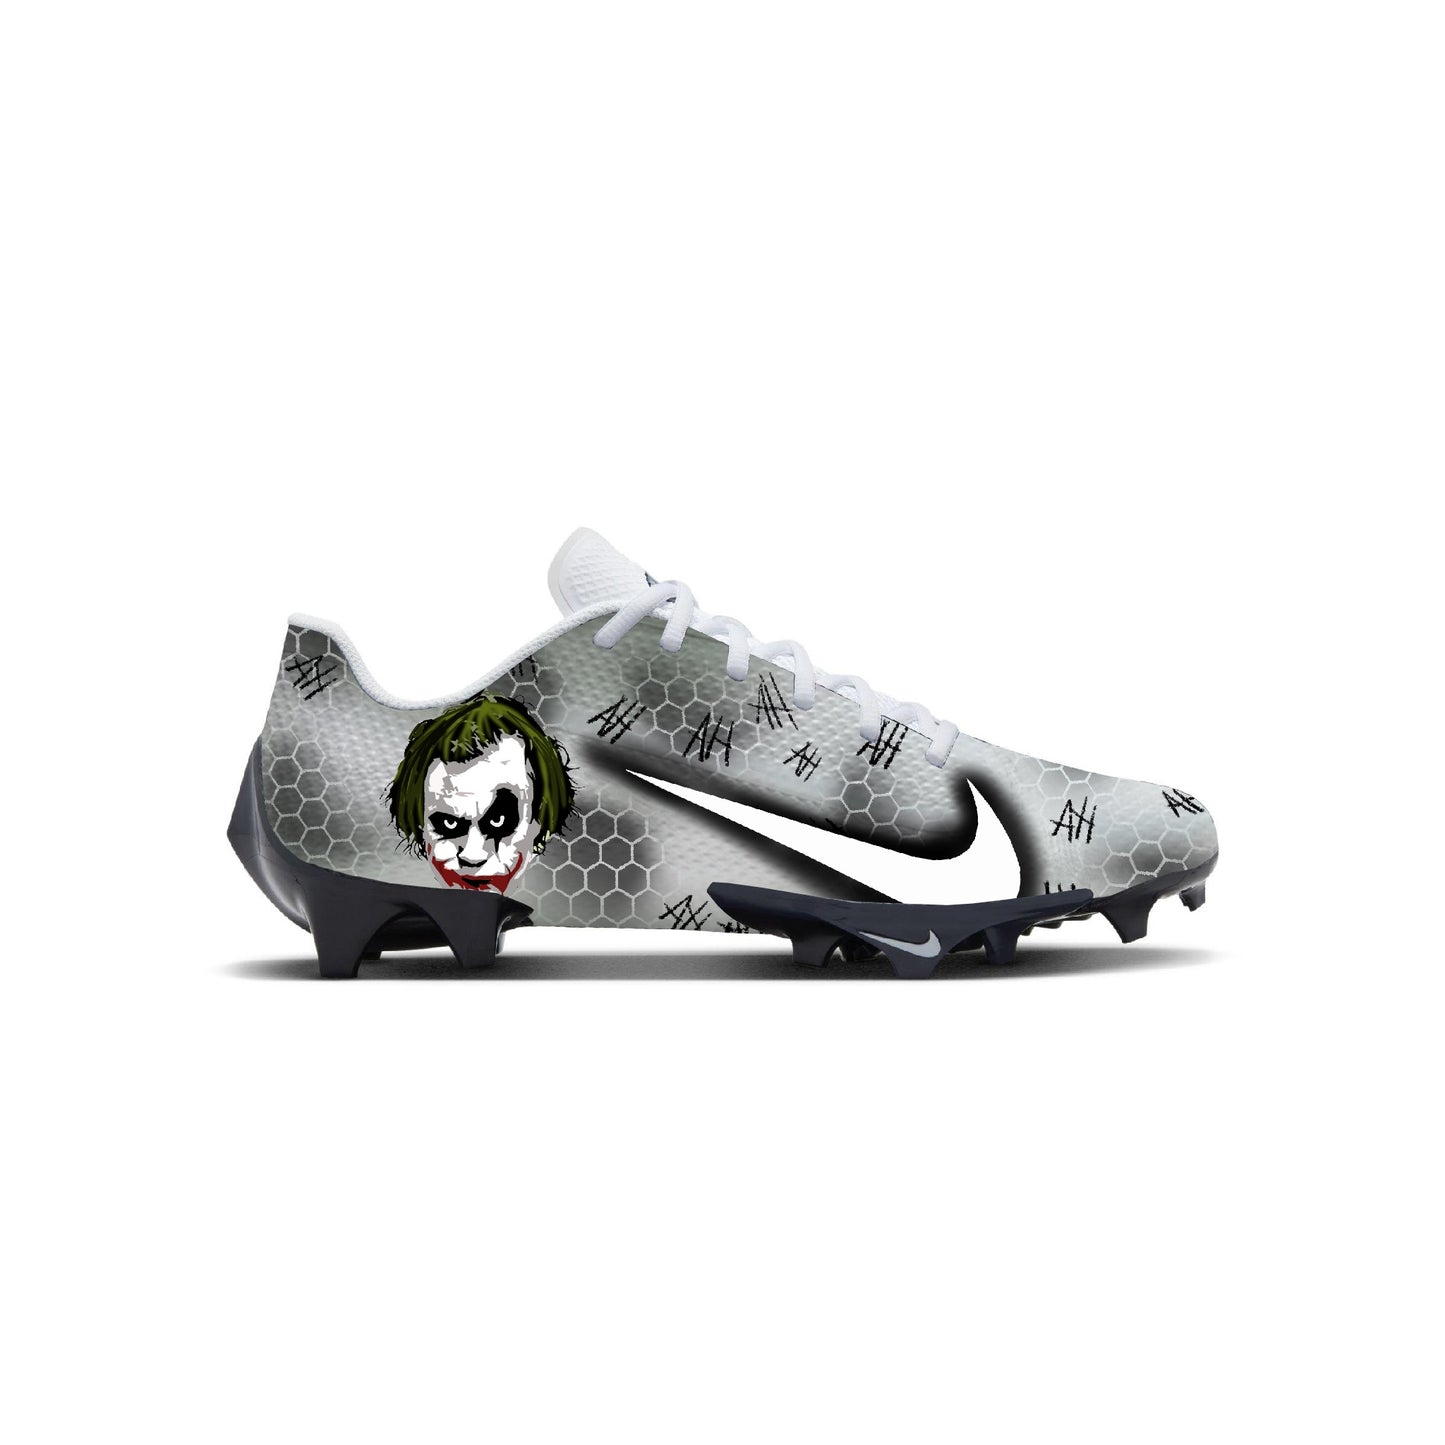 “The Joker” Football Cleats